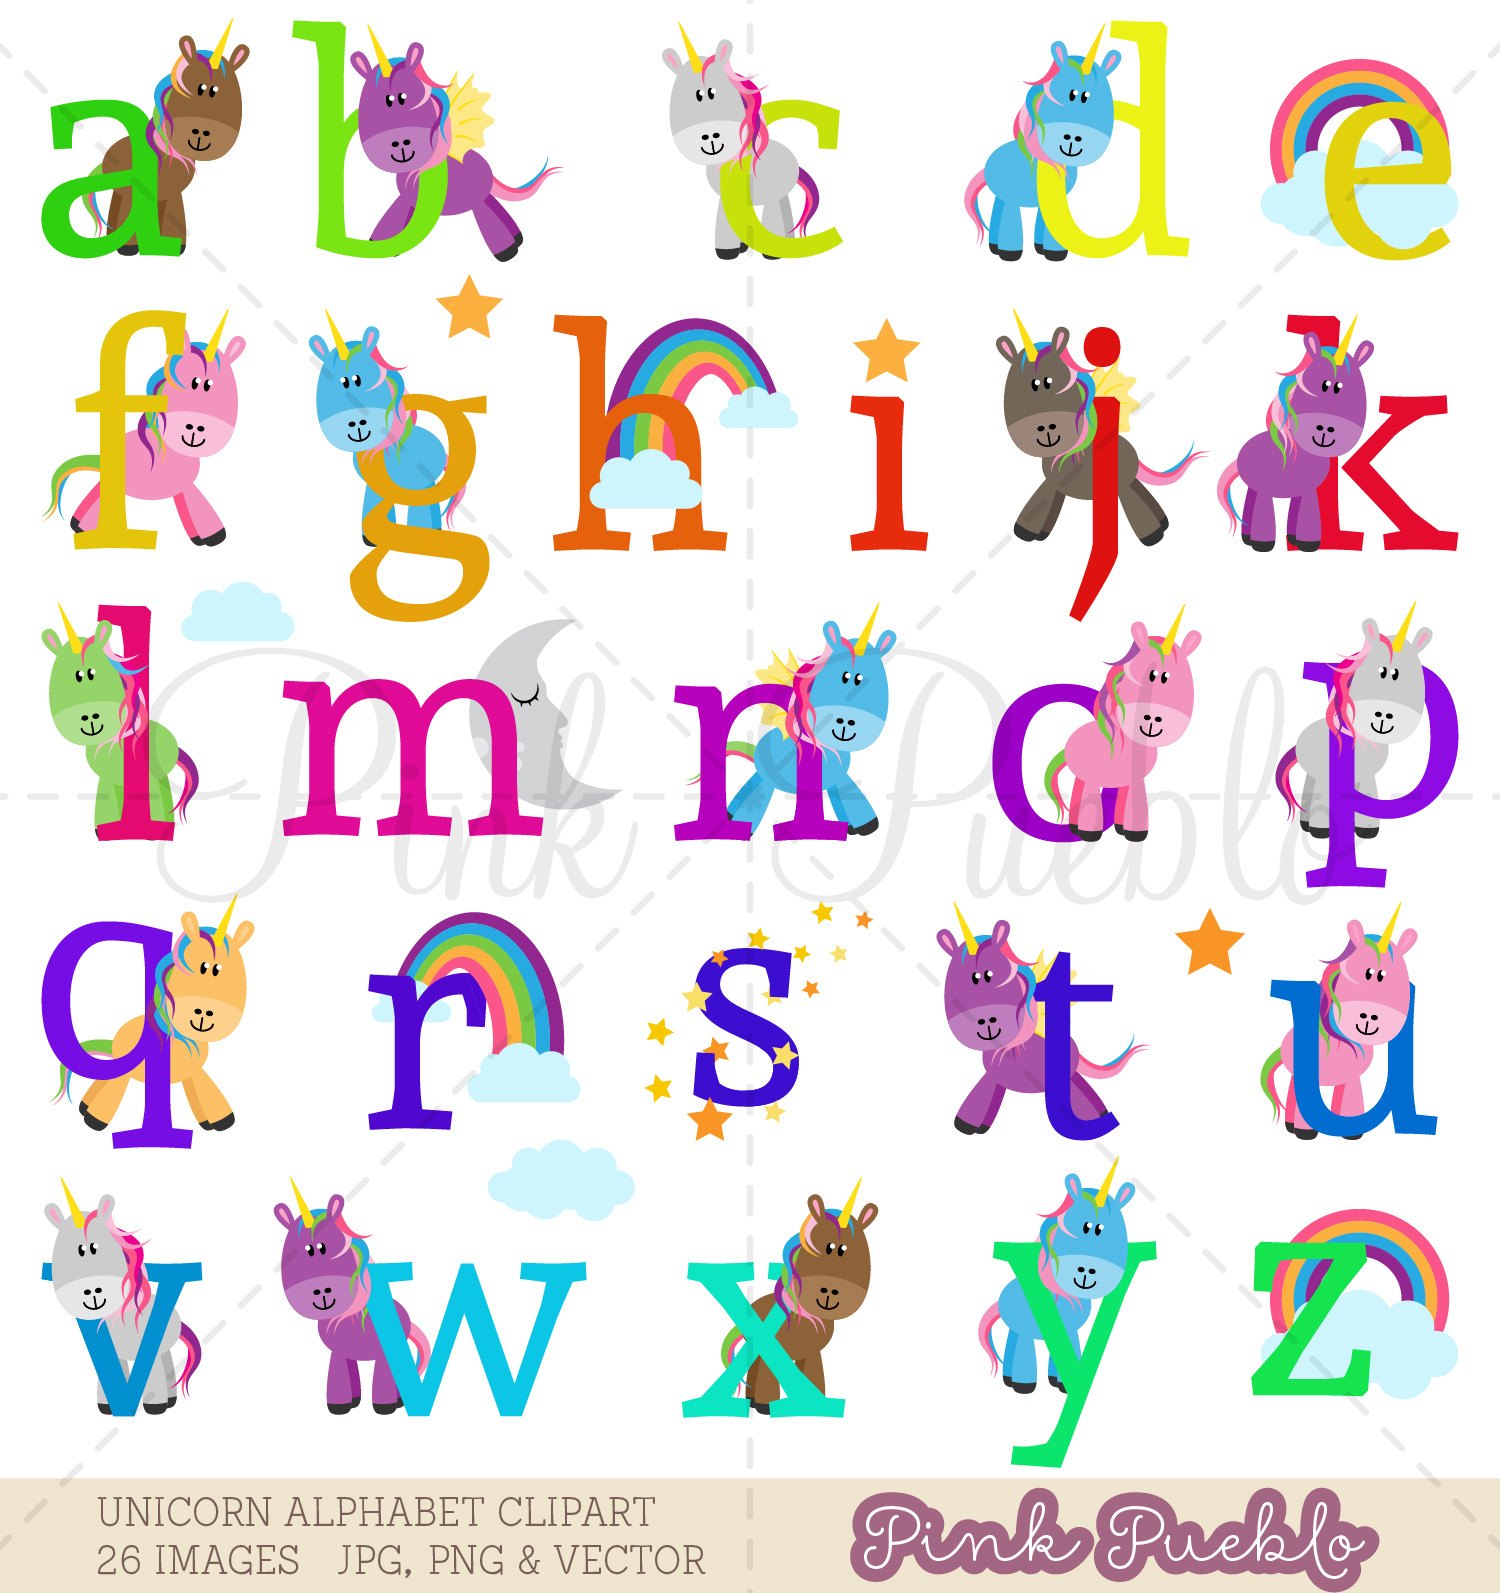 Lowercase Unicorn Alphabet Clipart Illustrations Creative Market